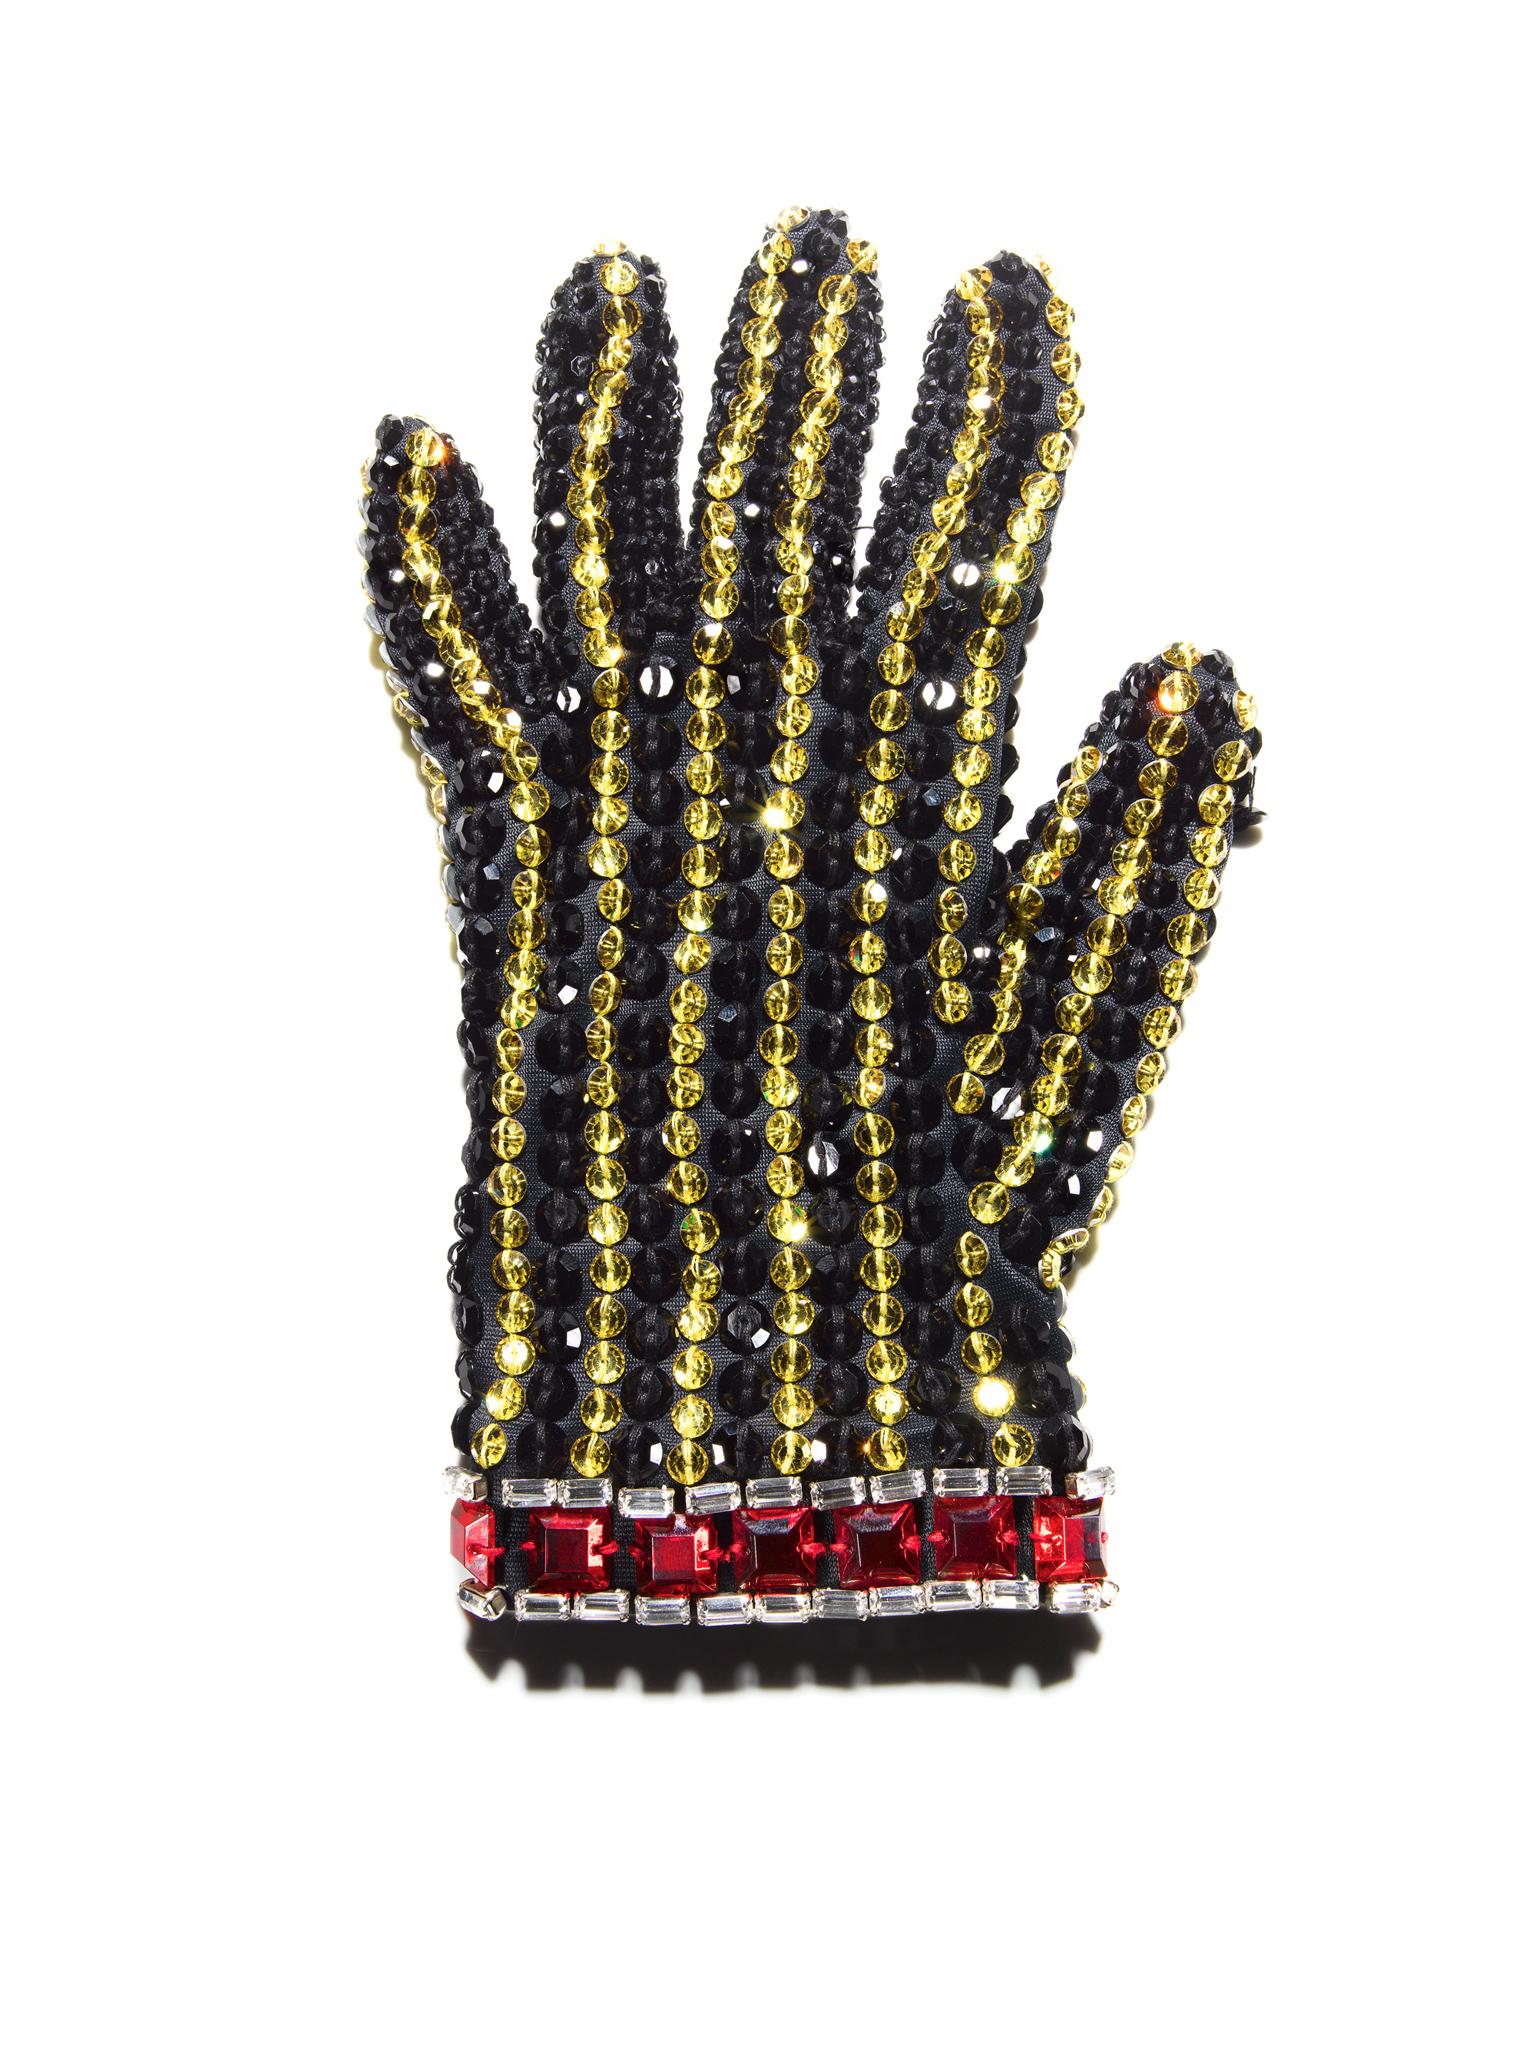 Schwarzer Handschuh ( Michael Jackson ) 40"" x 30"""